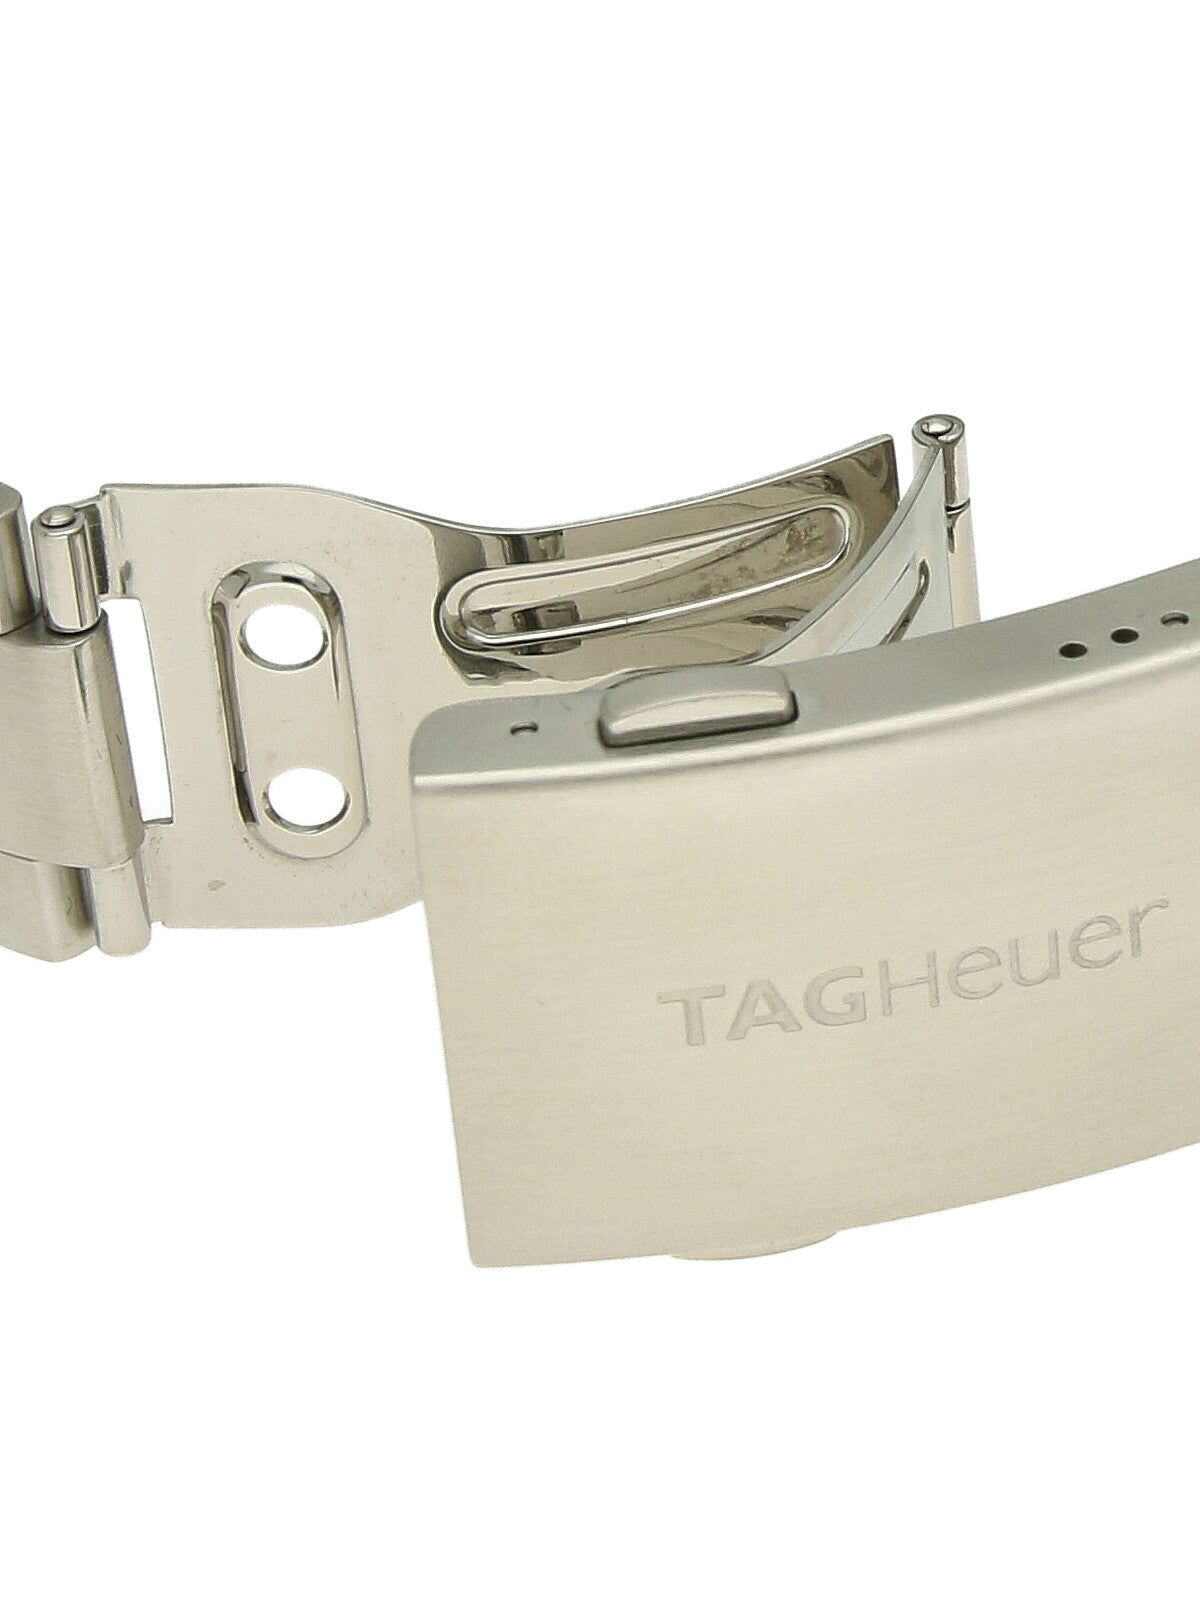 Pre Owned TAG Heuer Formula 1 Red Bull Racing Steel Quartz 43mm Watch on Bracelet